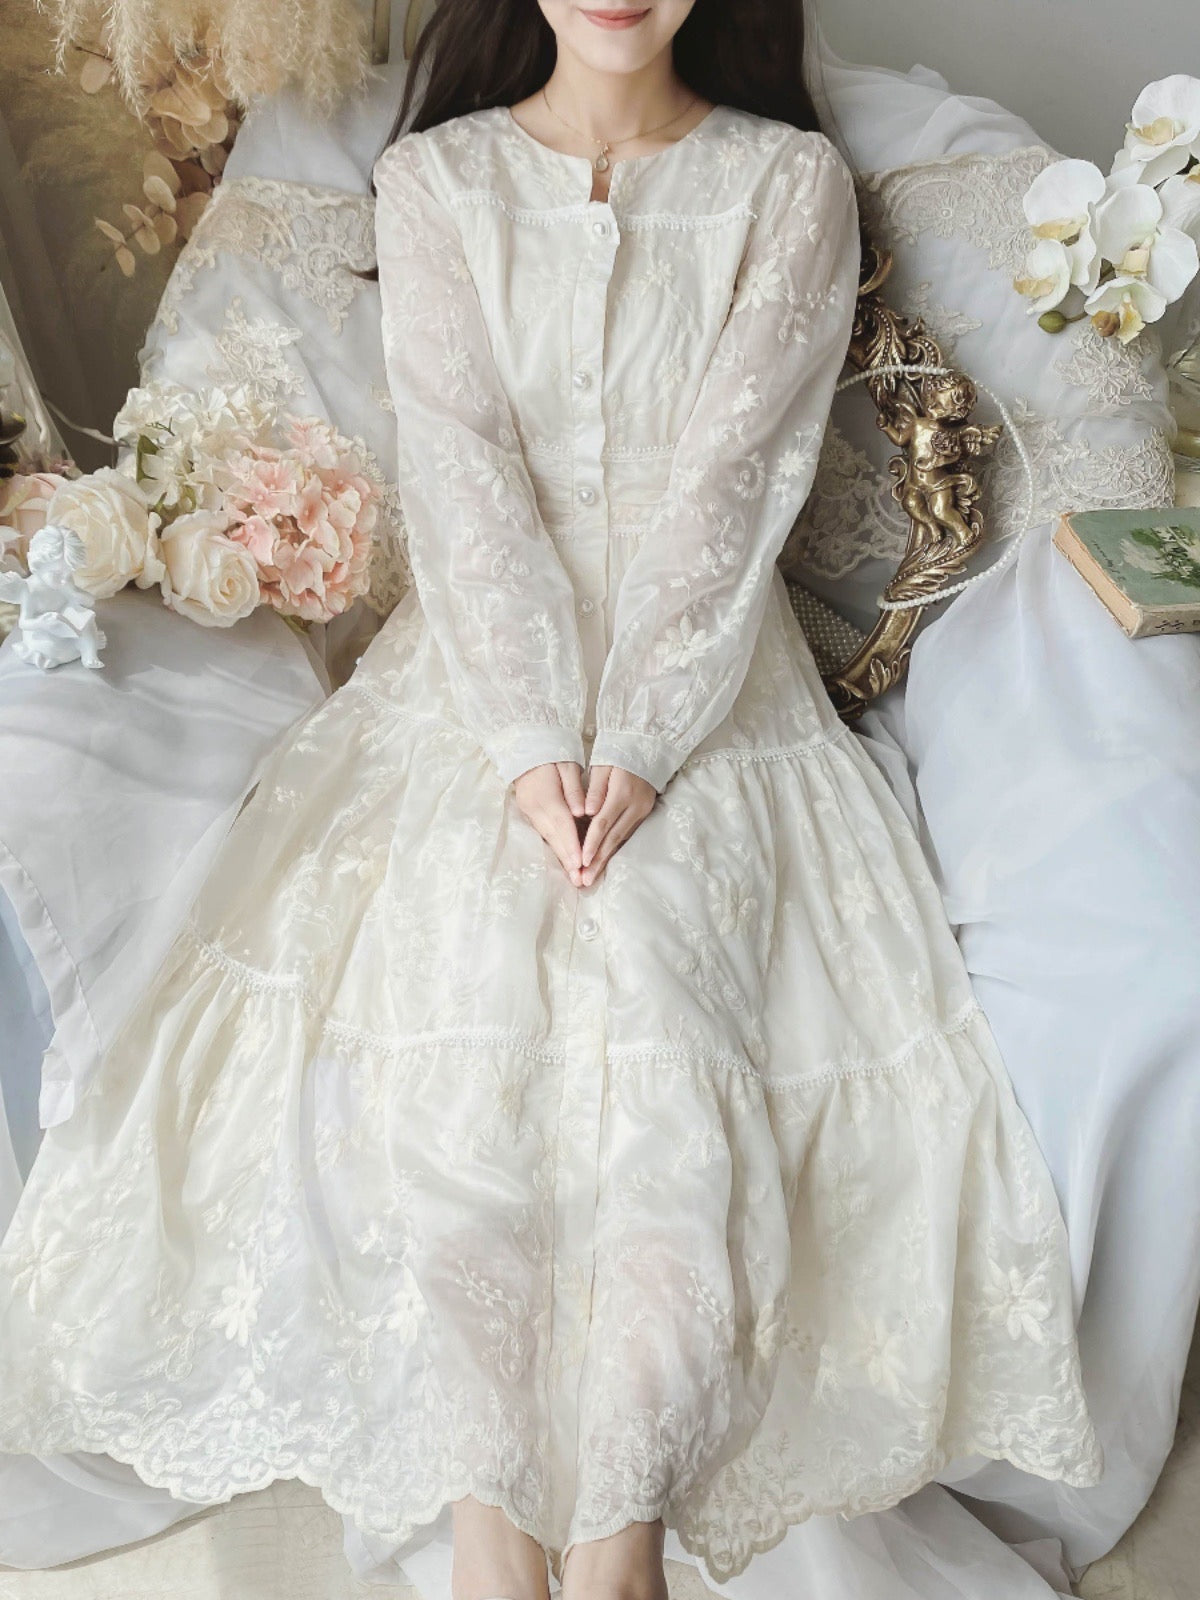 Anastasia Light Academia Dress